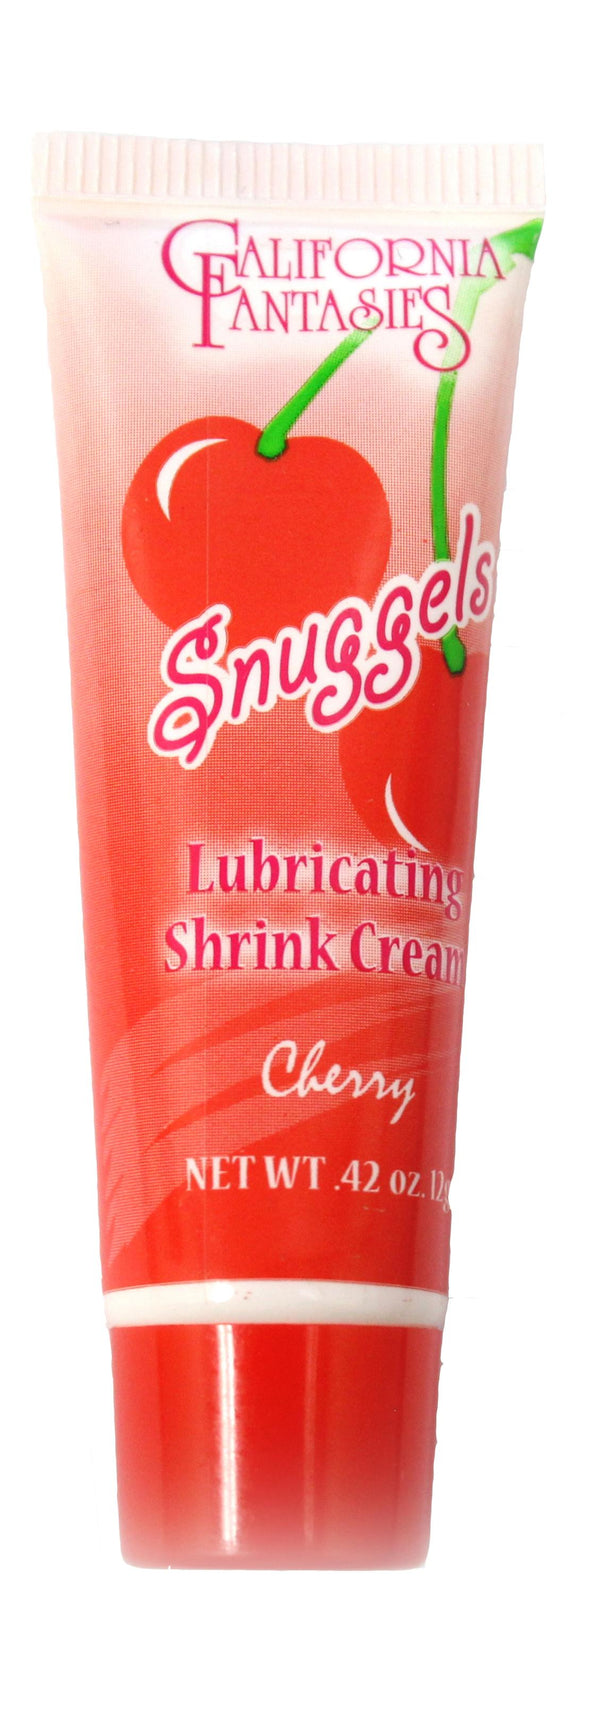 Snuggels - Lubricating Shrink Cream - Cherry - 0.42 Oz. Tube - Each